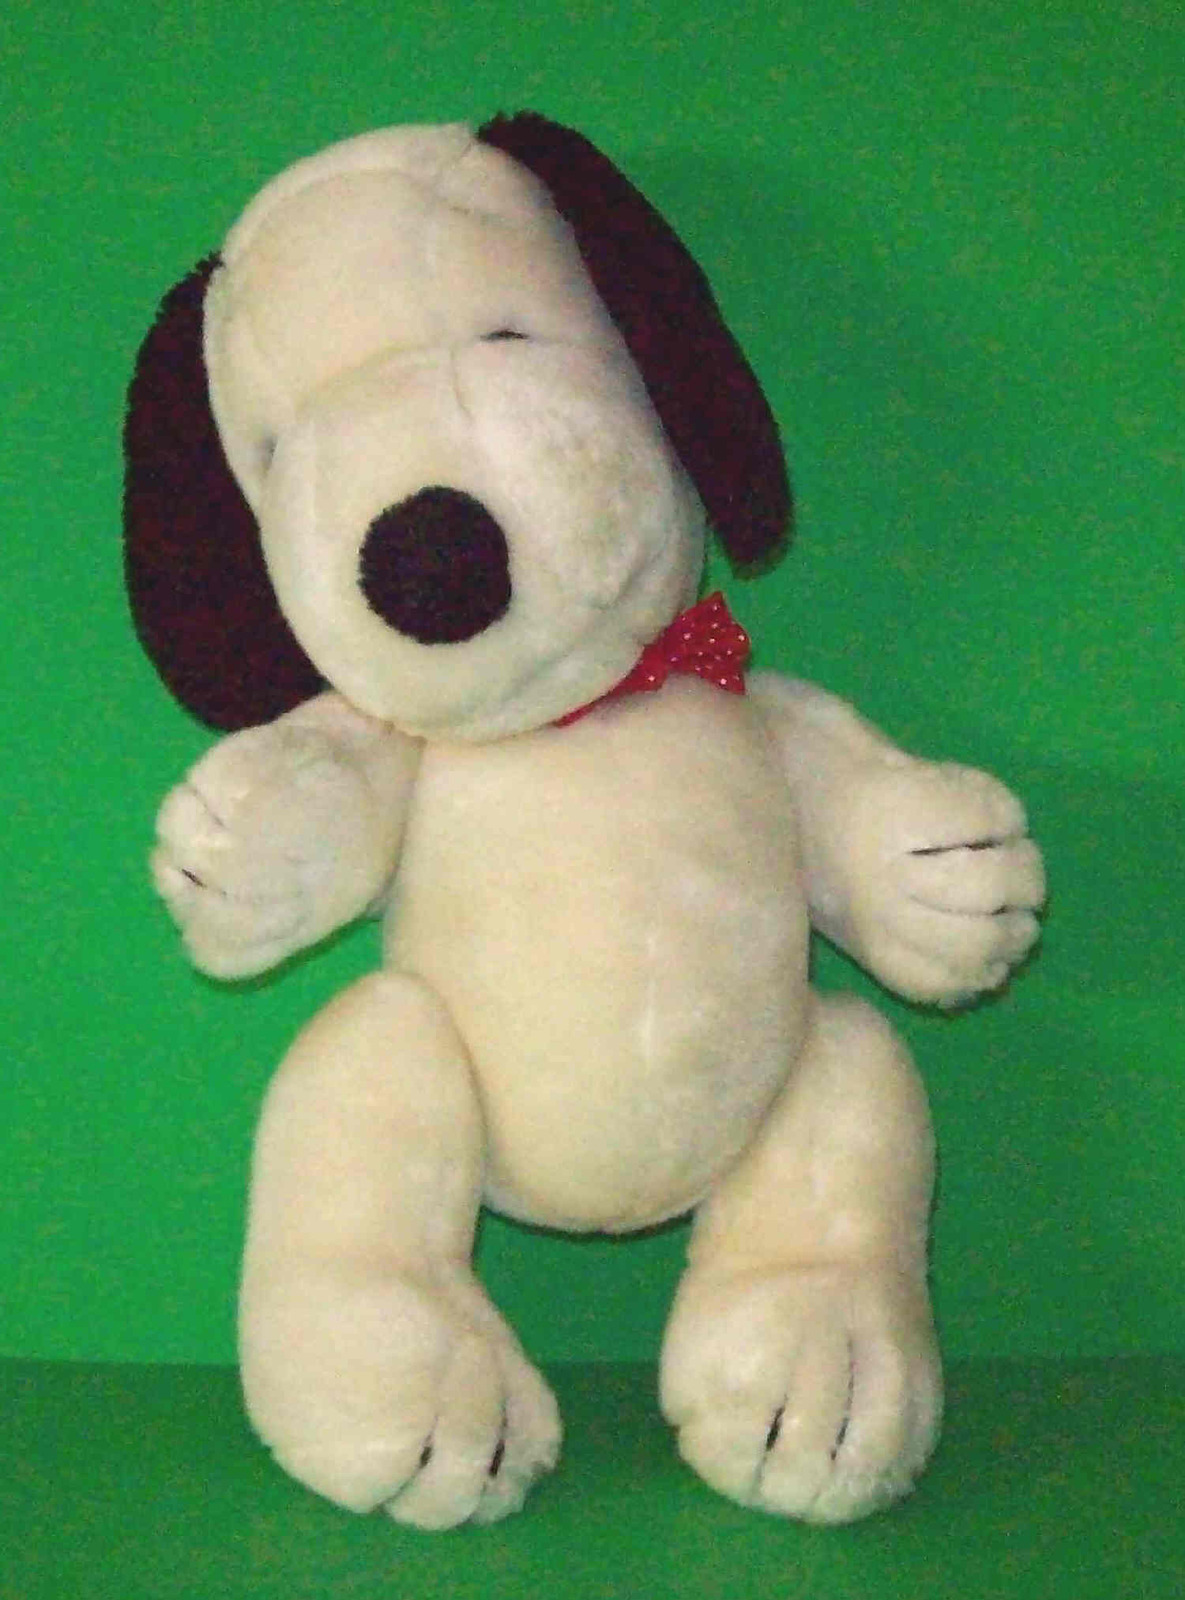 1958 snoopy stuffed animal